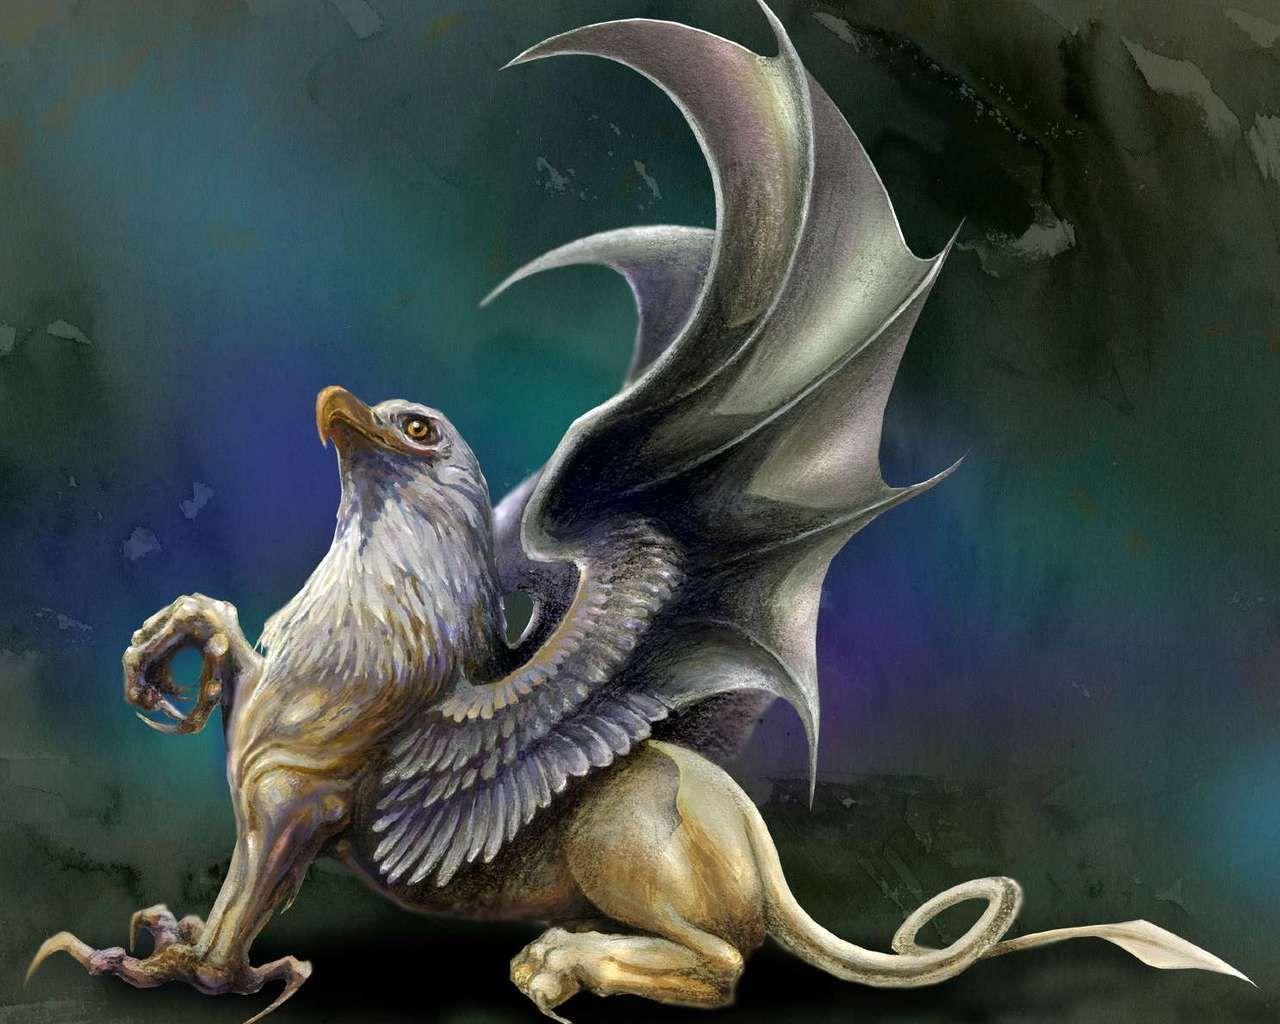 Griffin Computer Wallpaper, Desktop Backgroundx1024. Mythological creatures, Mythical creatures, Magical creatures